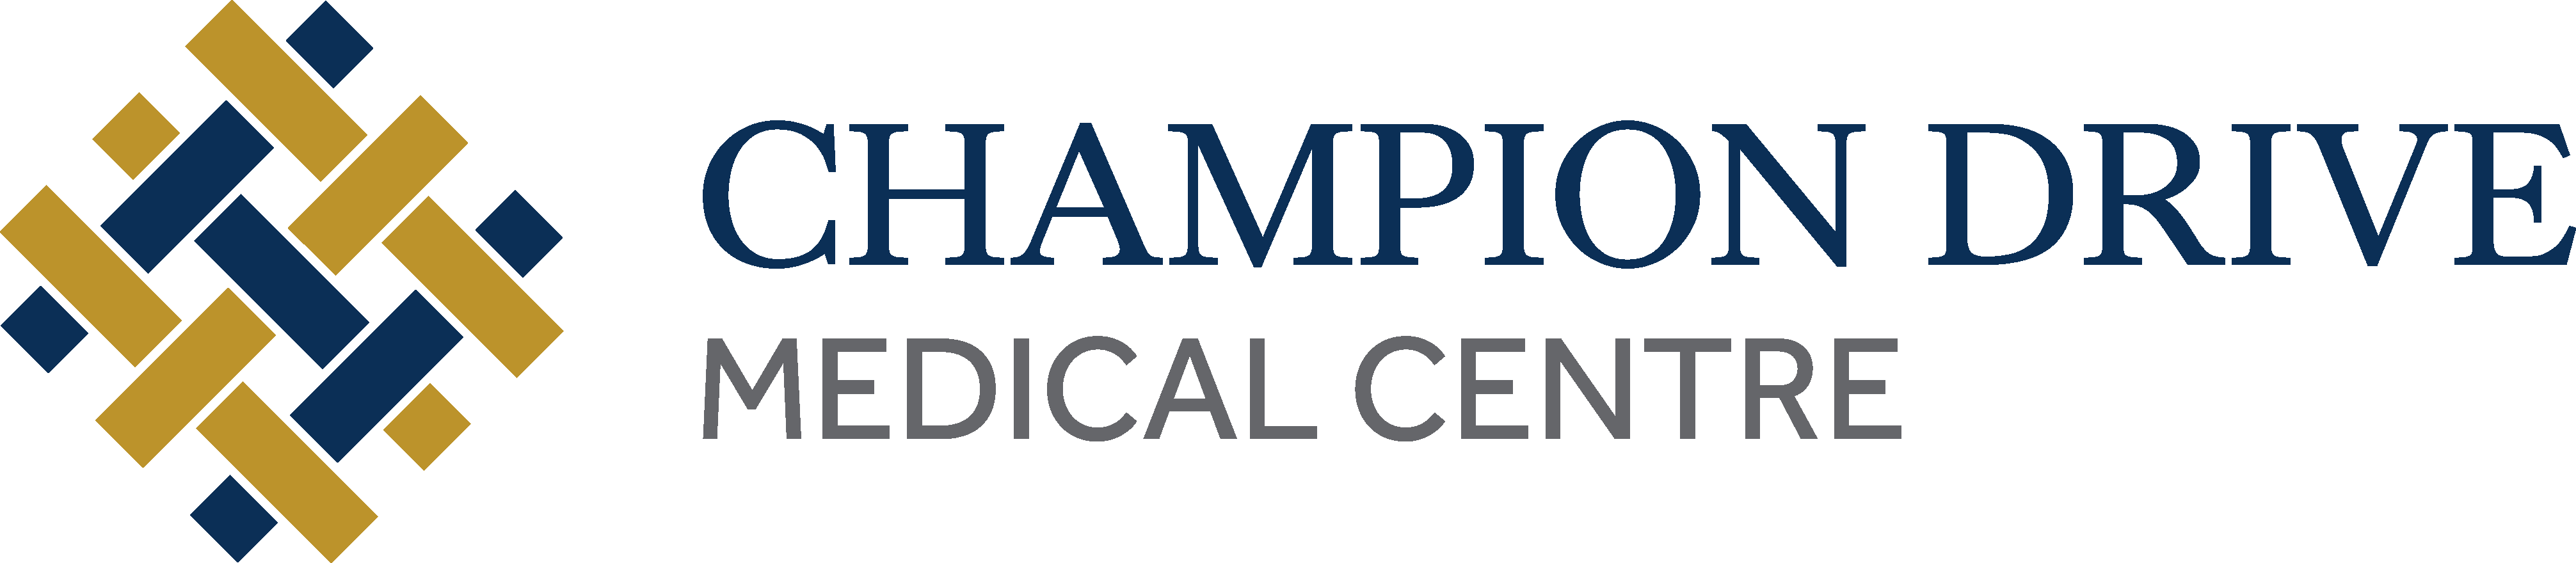 Champion Drive Medical Centre